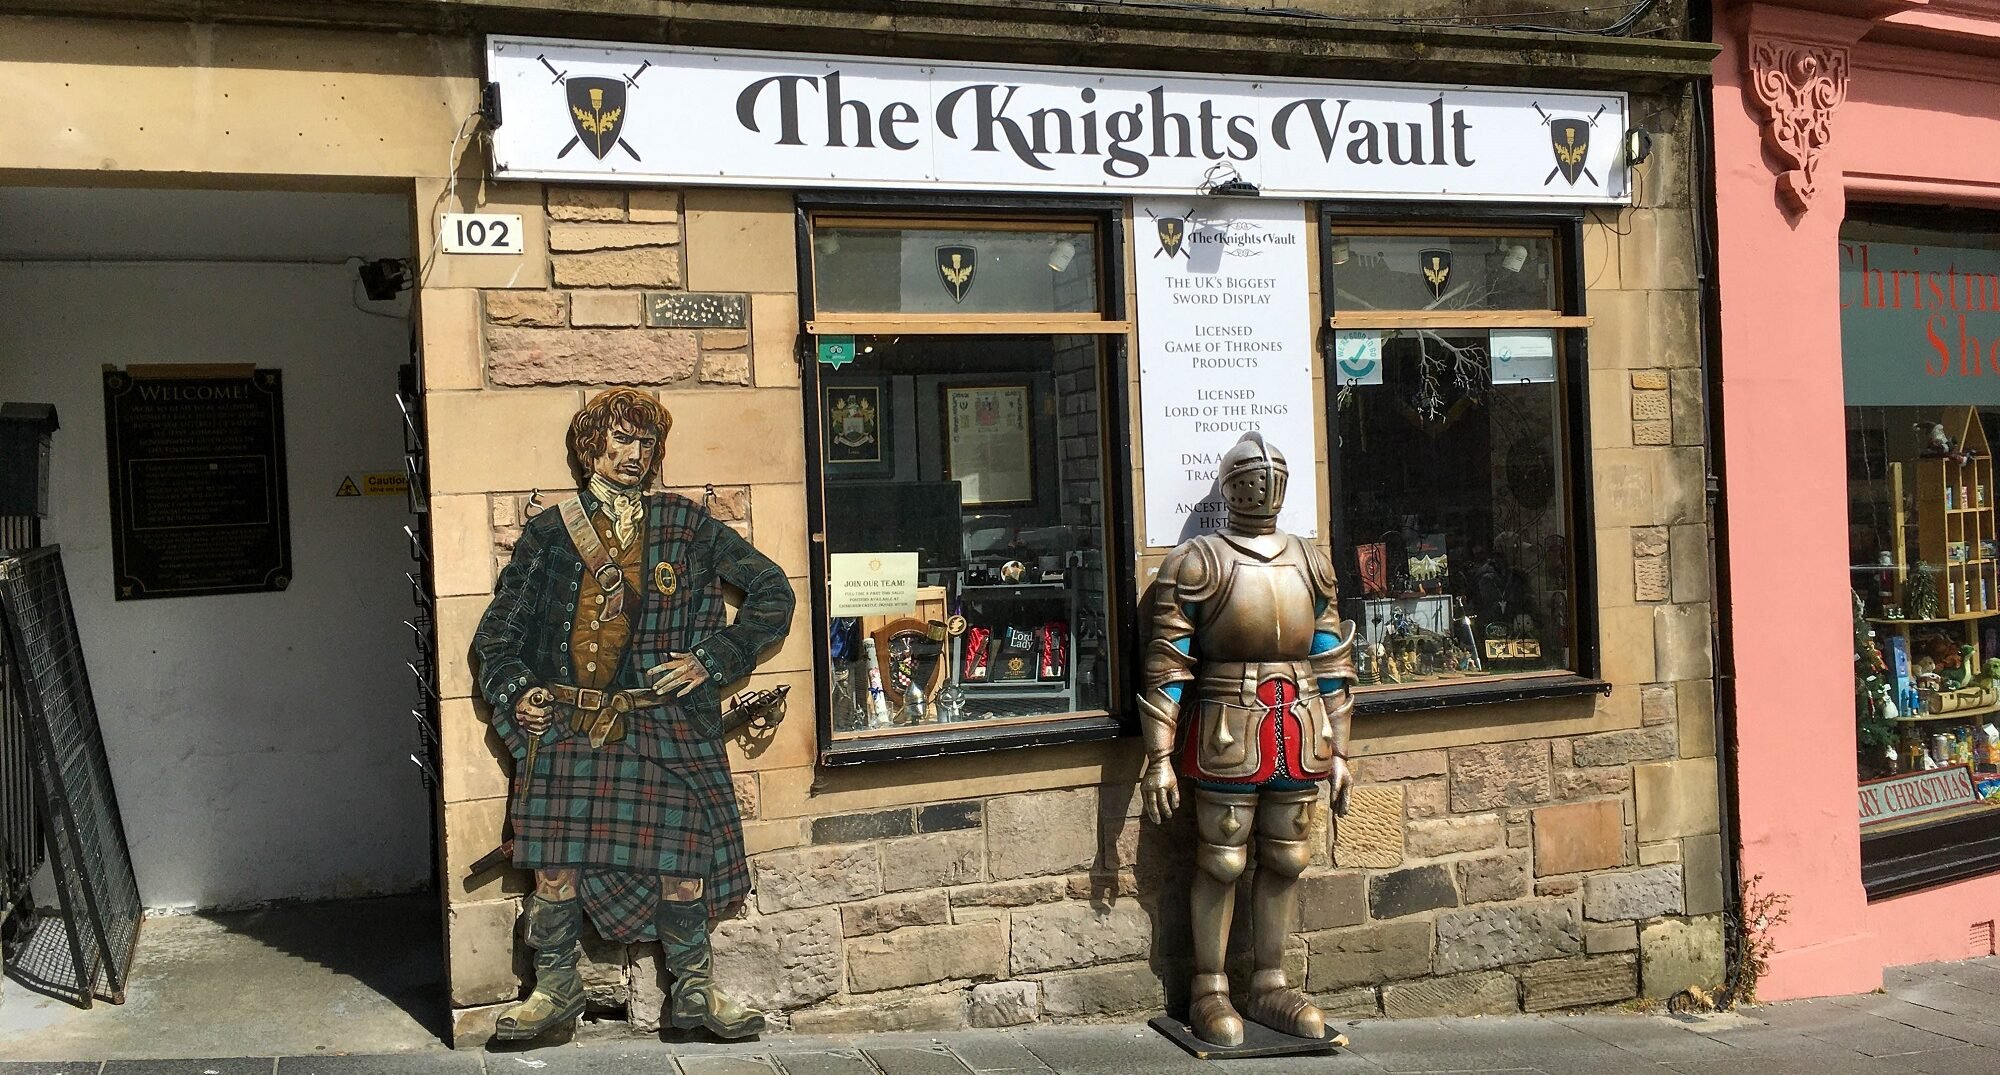 The Knight's Vault